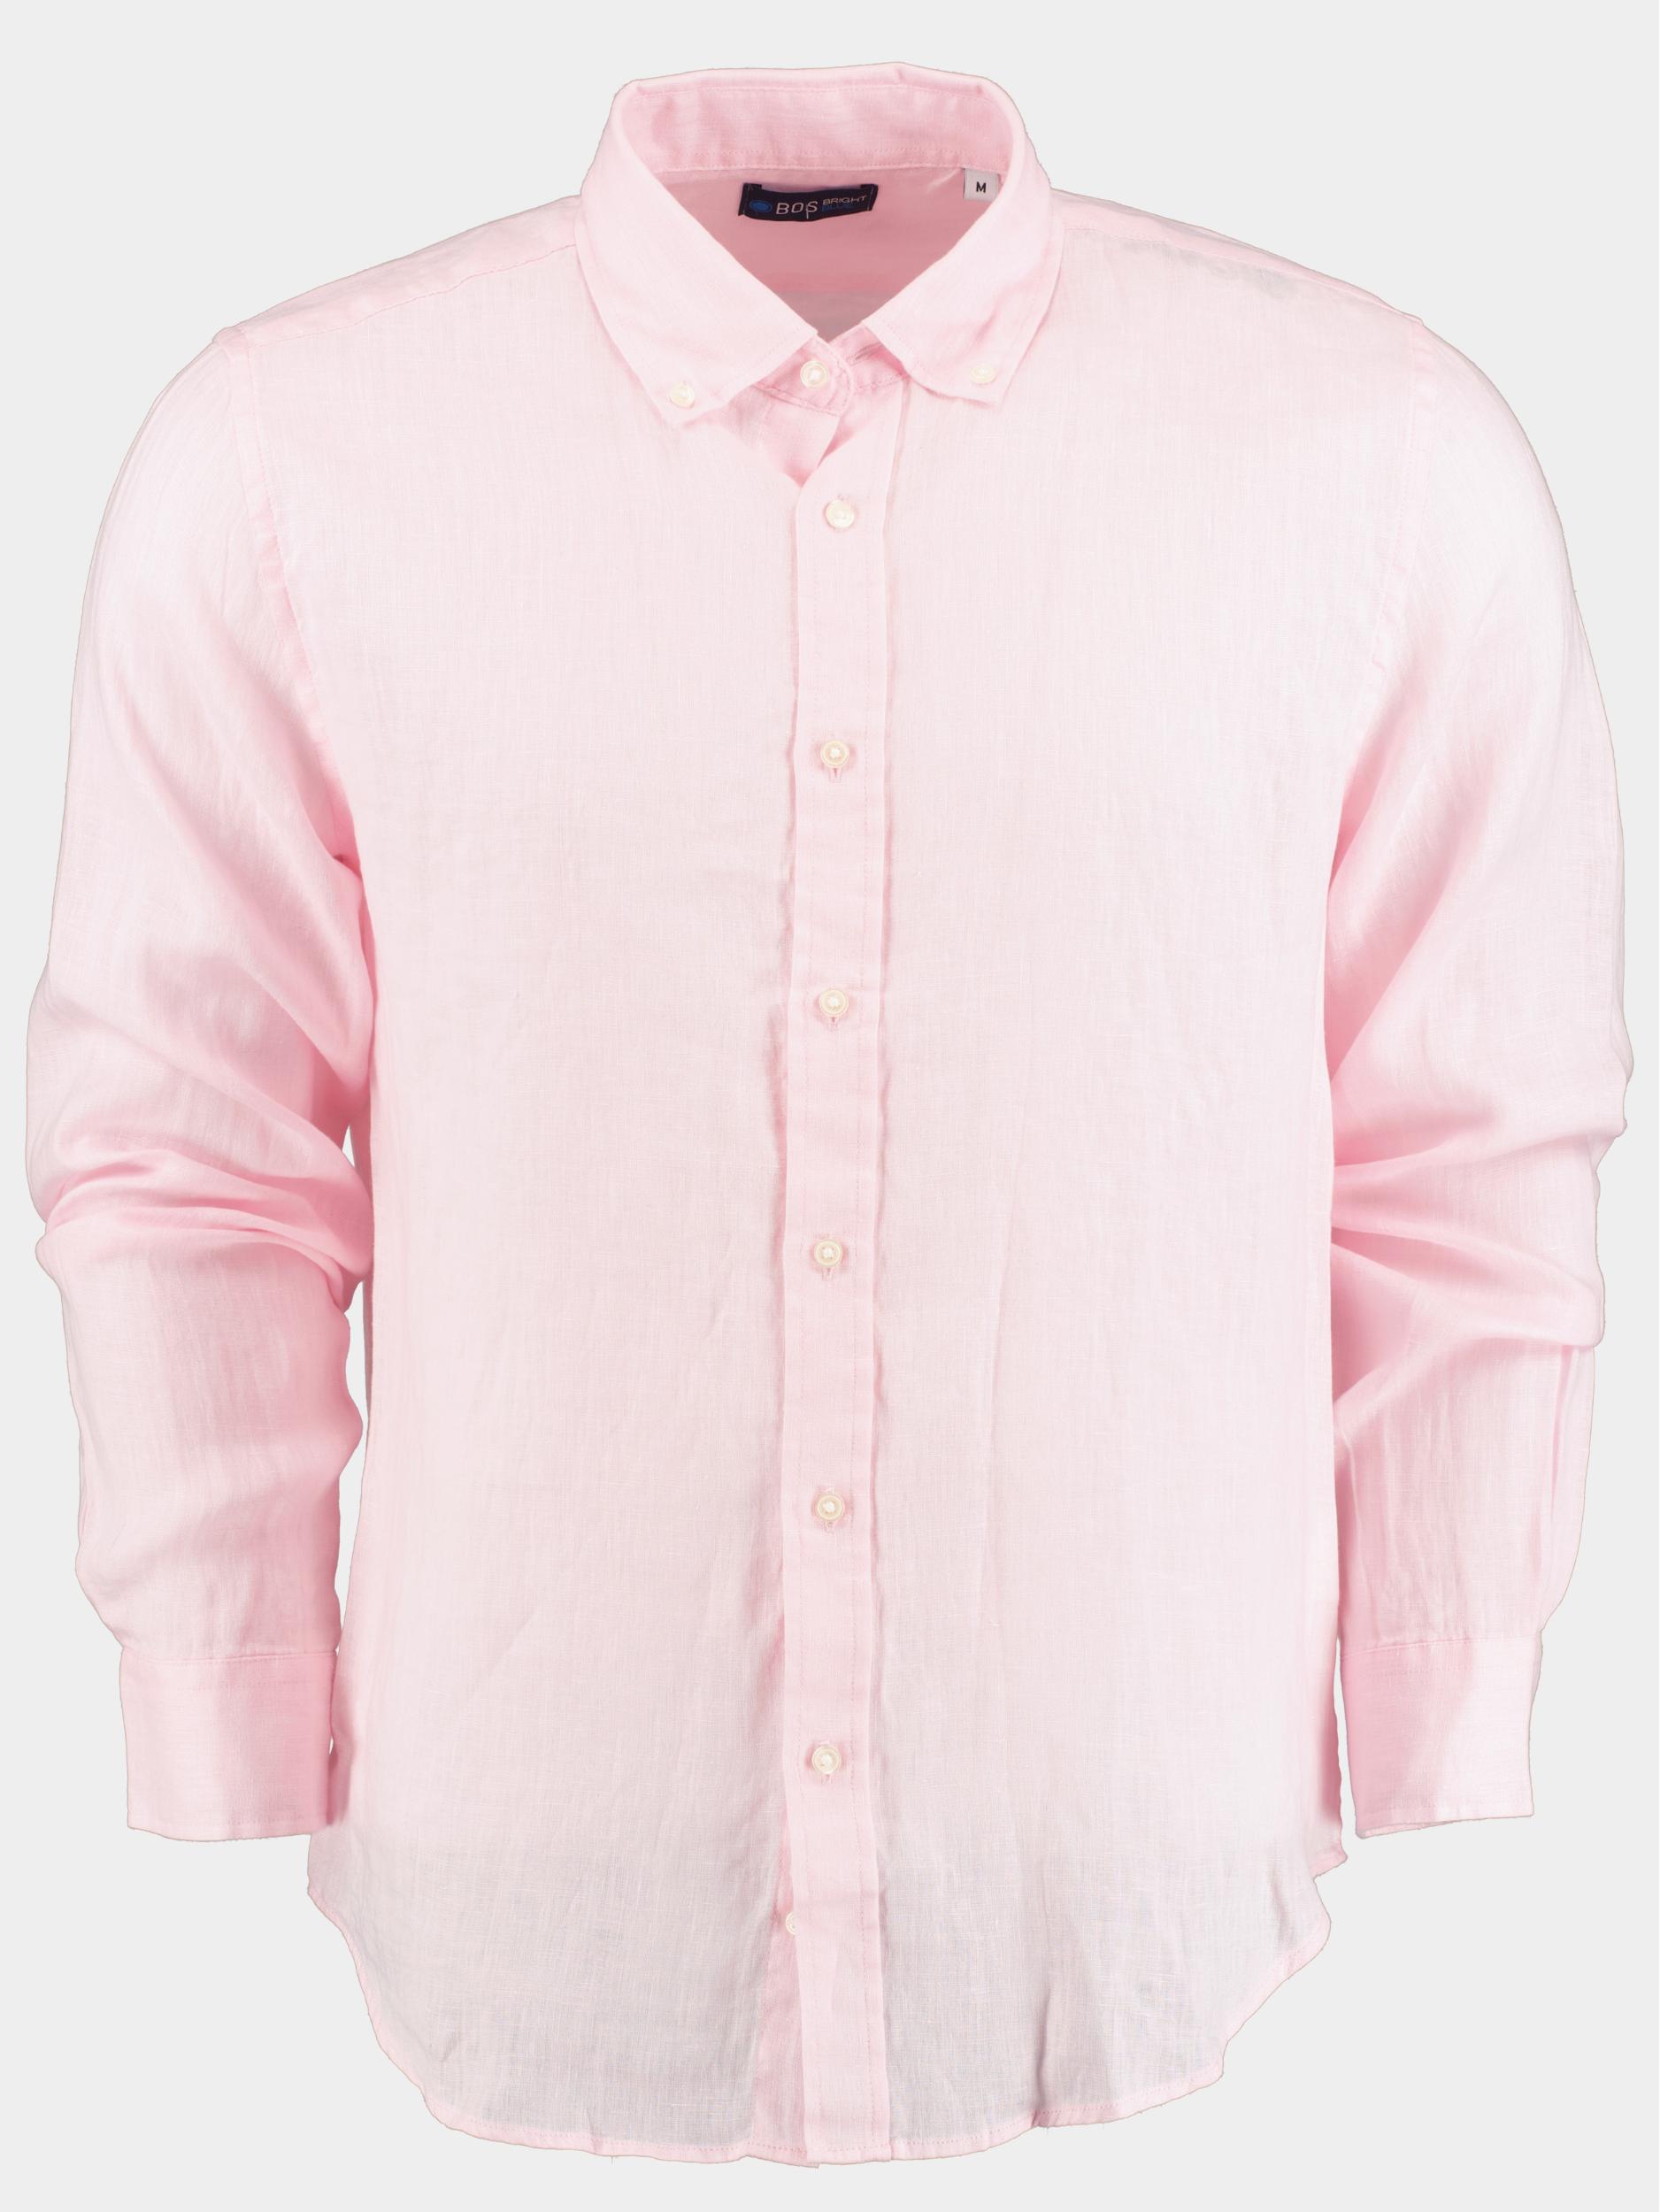 Bos Bright Blue Casual hemd lange mouw Roze Linnen shirt slim fit 9435900/502